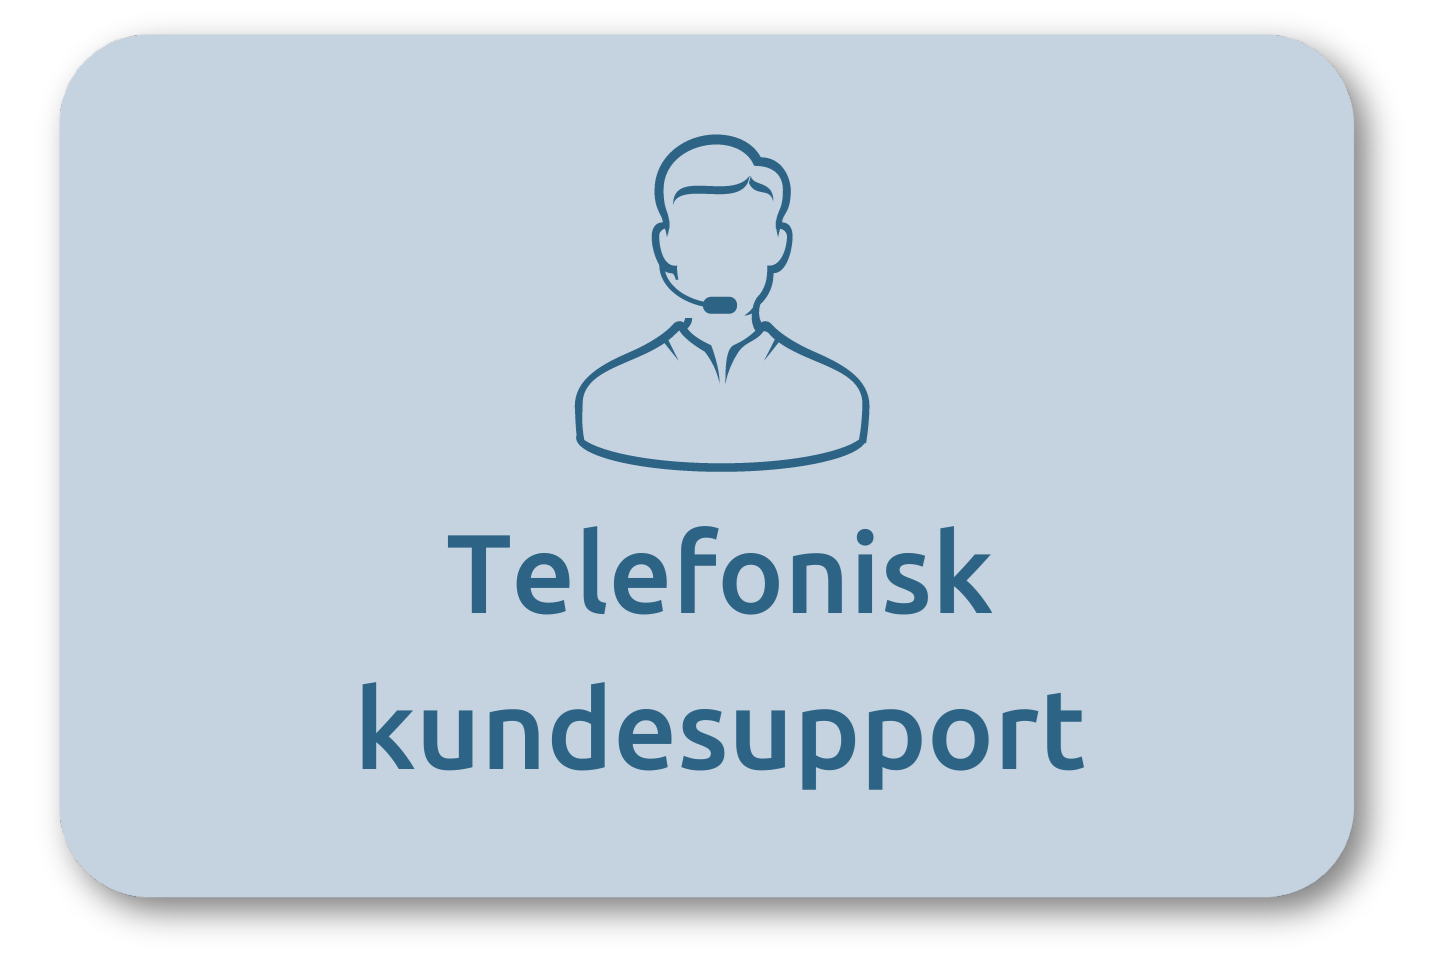 Telefonisk support